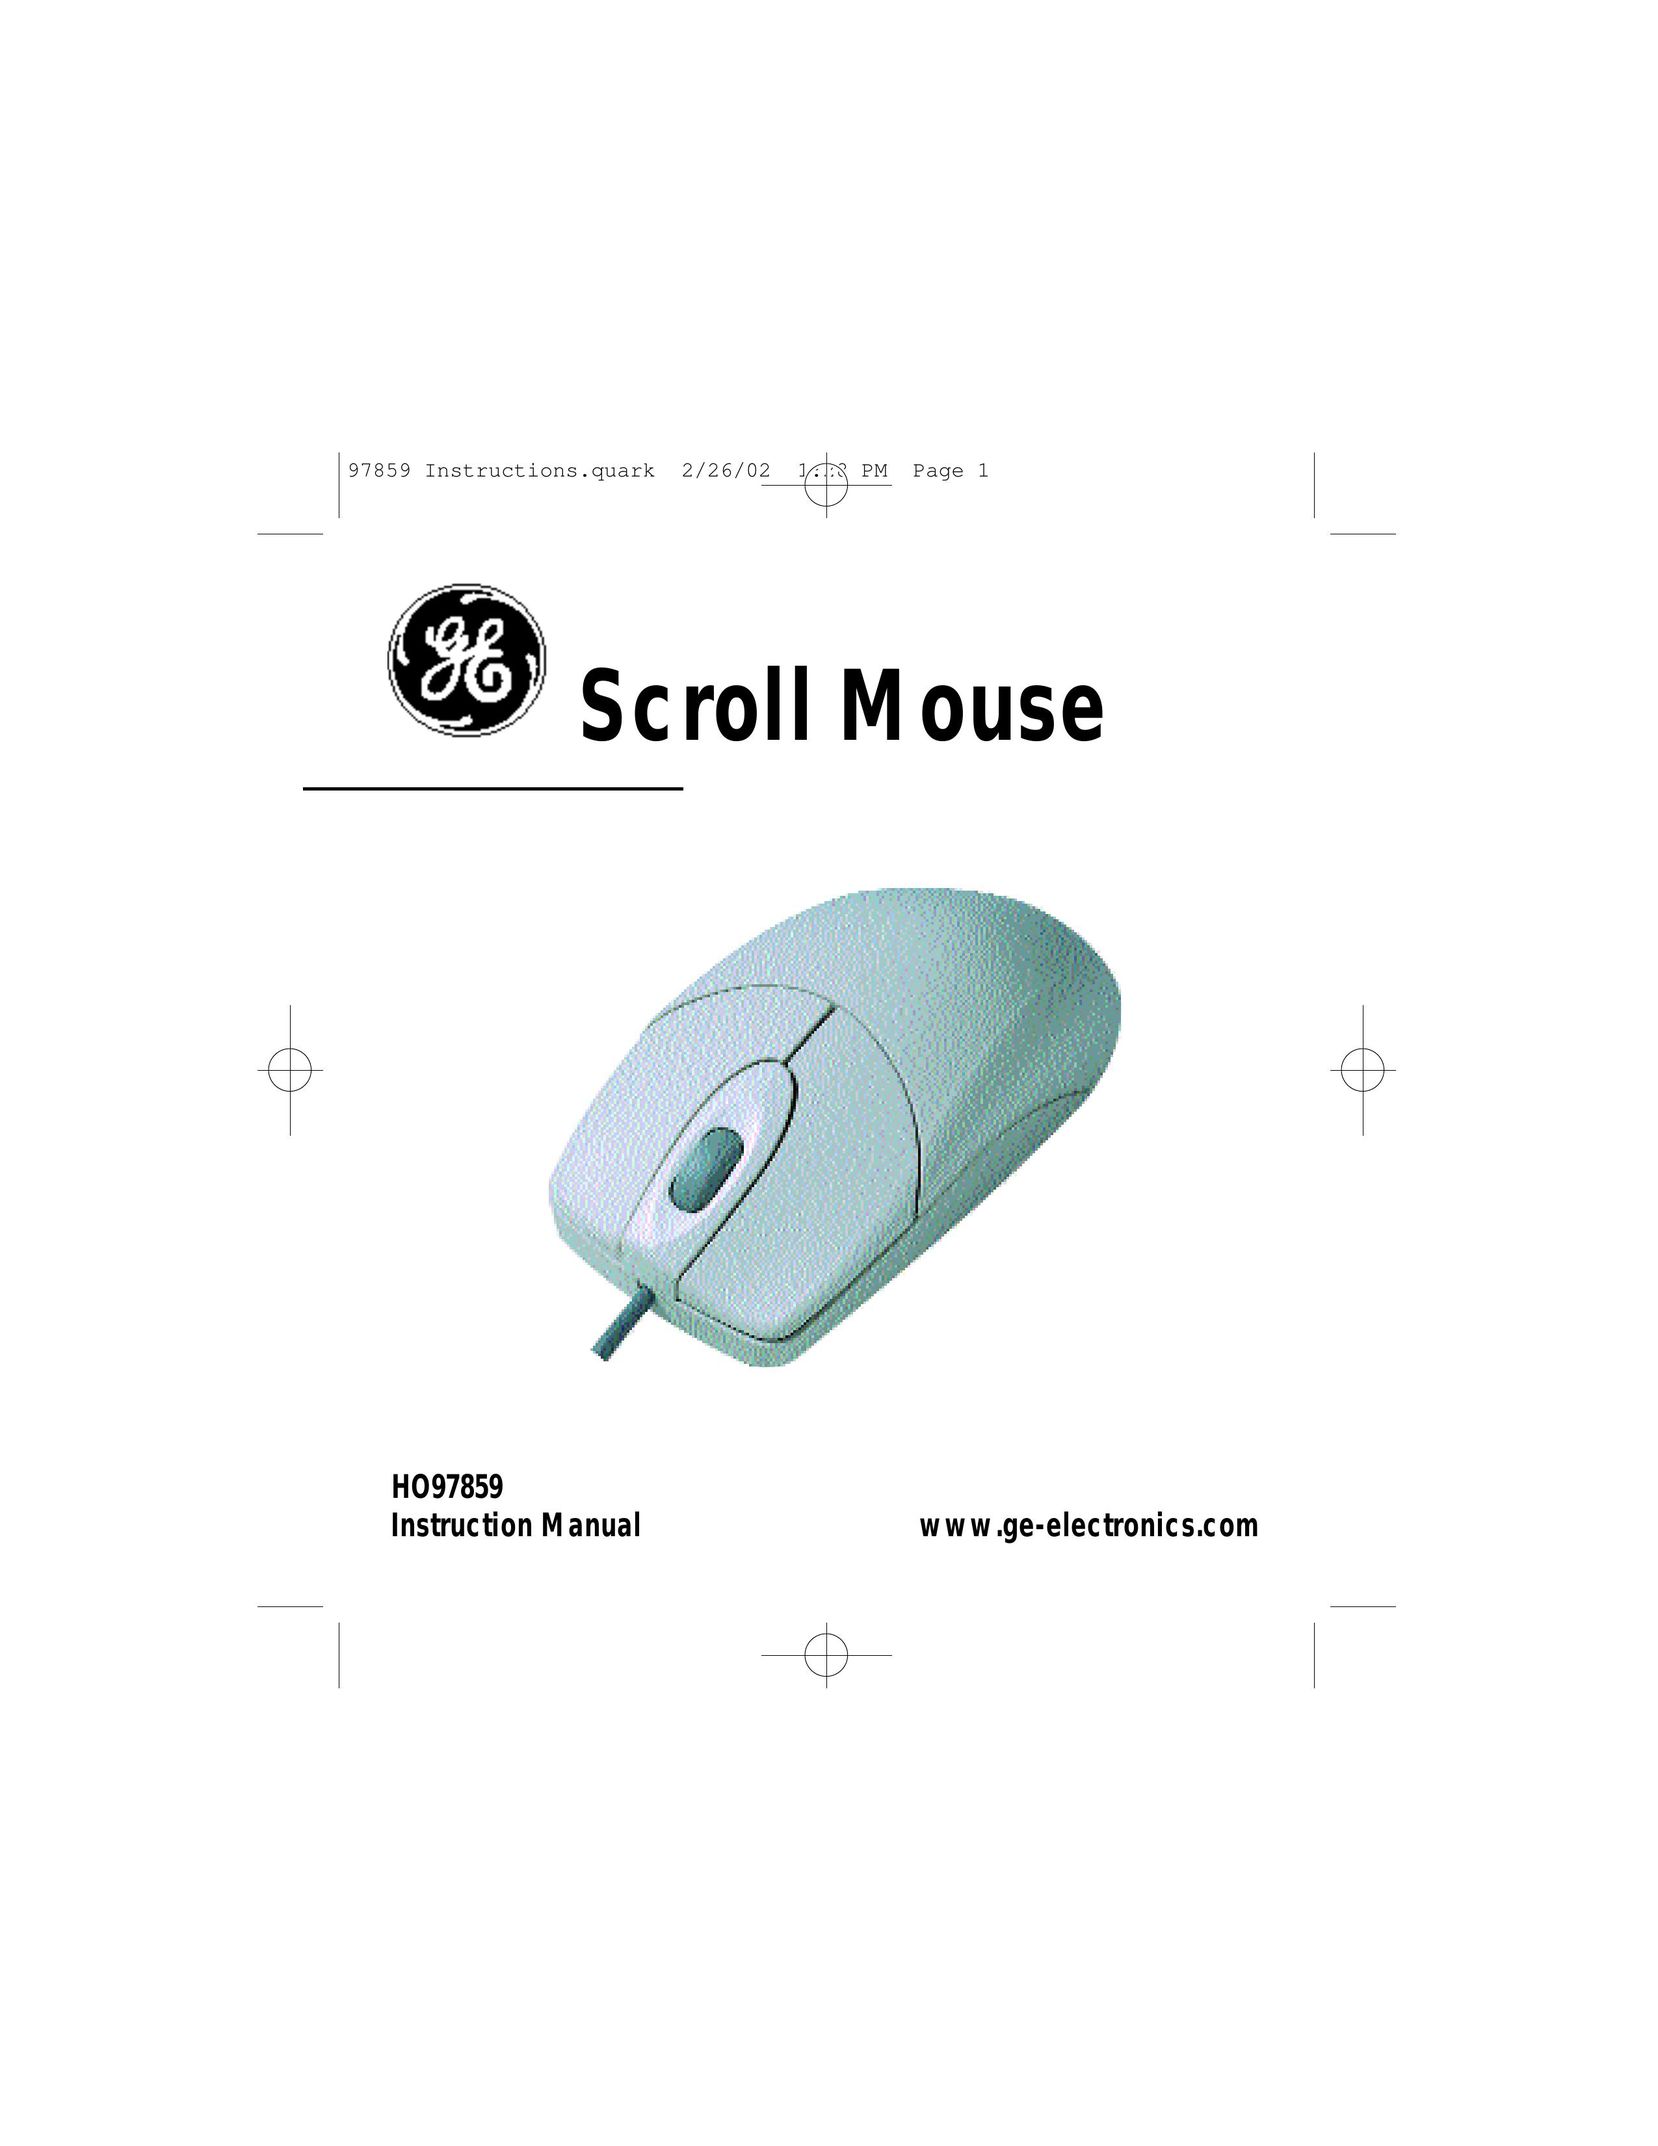 GE HO97859 Mouse User Manual